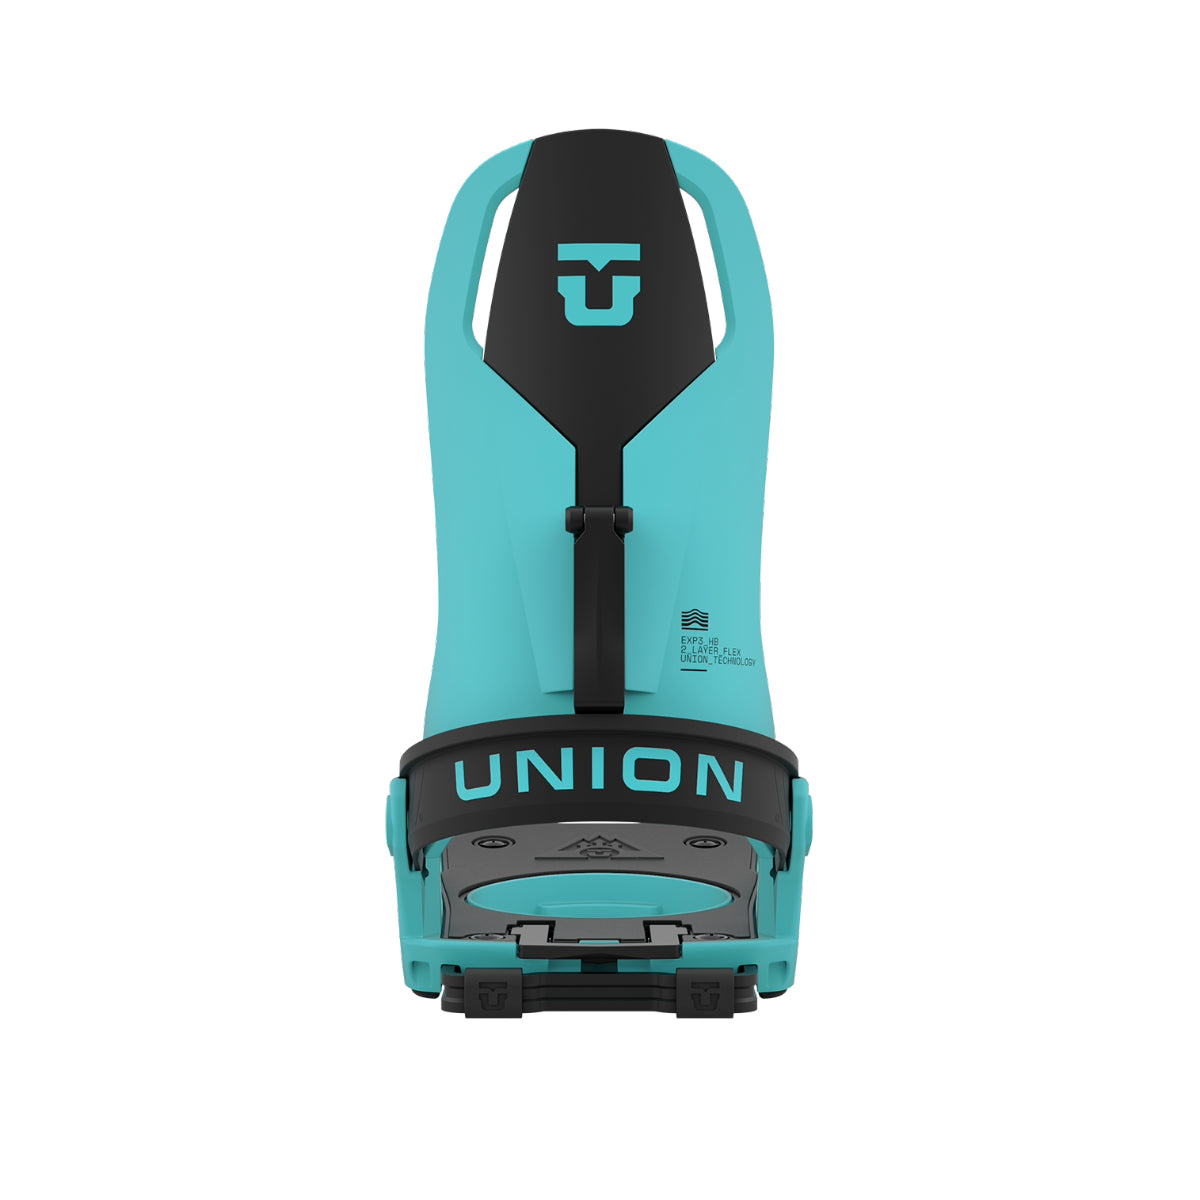 Union Binding - Unisex Charger - Cyan